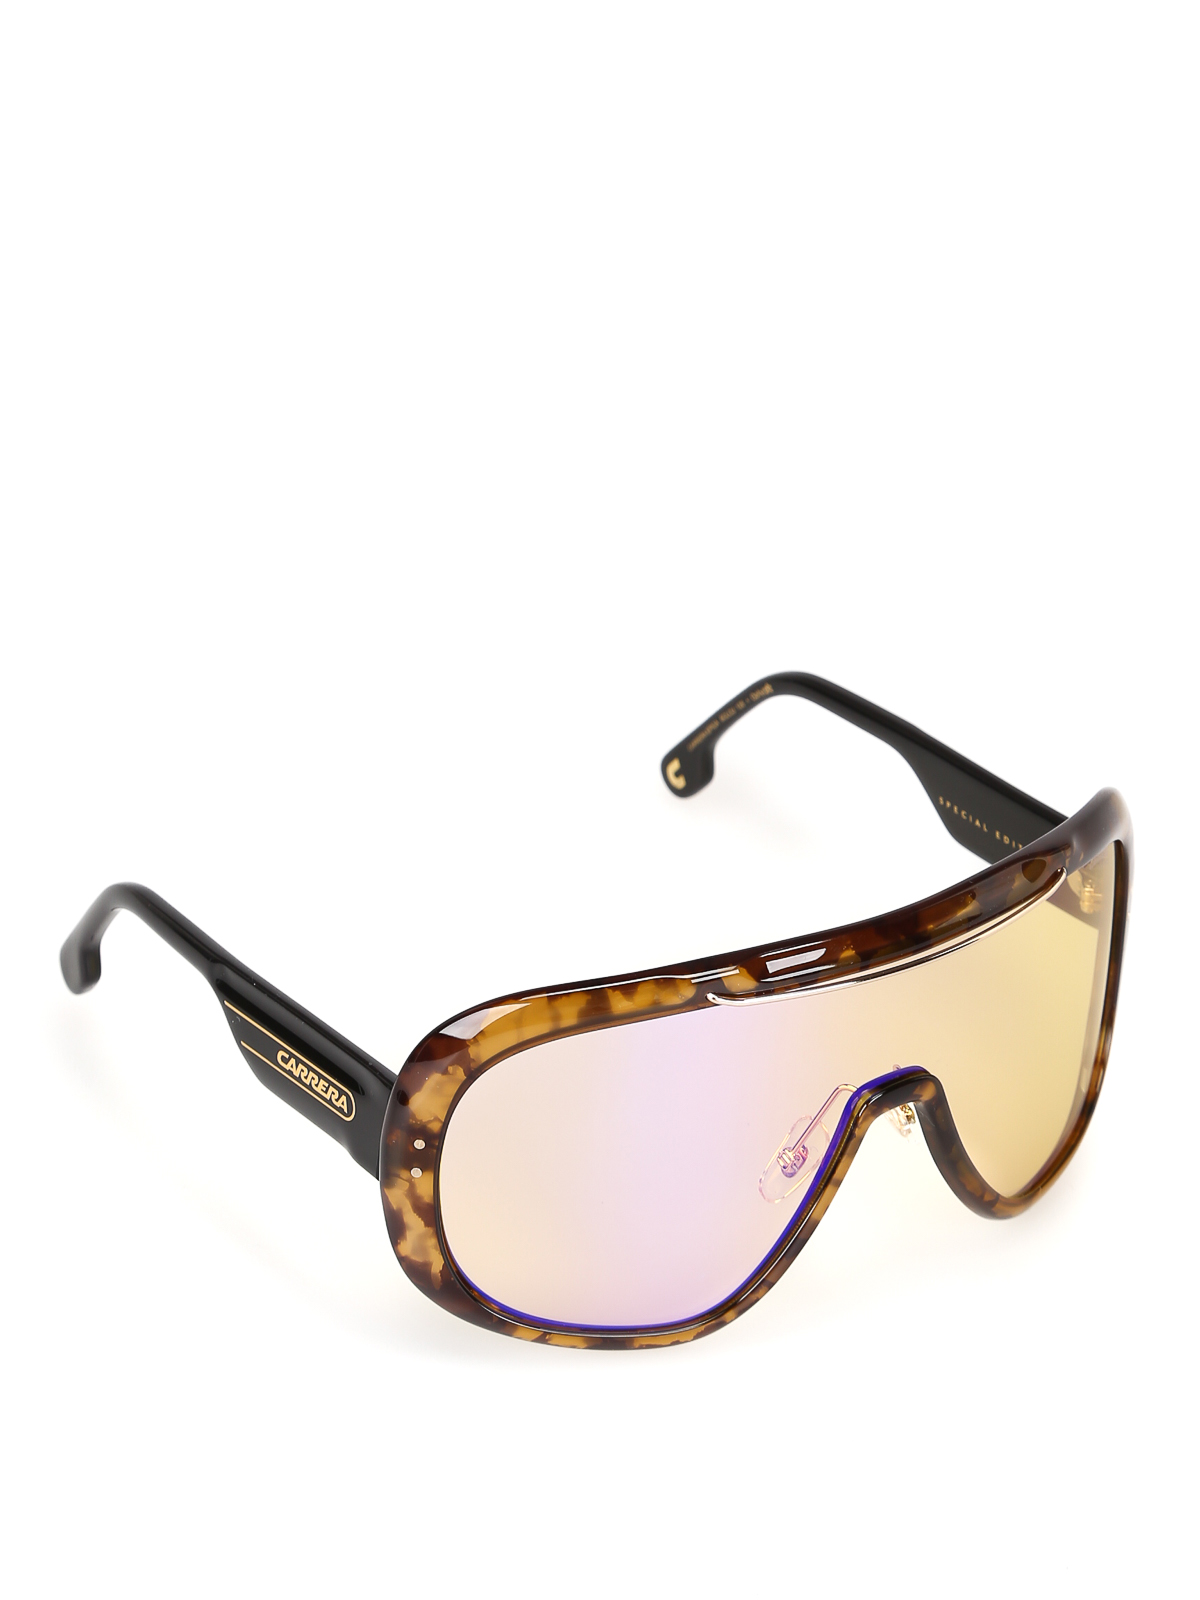 Sunglasses Carrera - Carrera Epica Special Edition sunglasses -  CARRERAEPICASCLCU